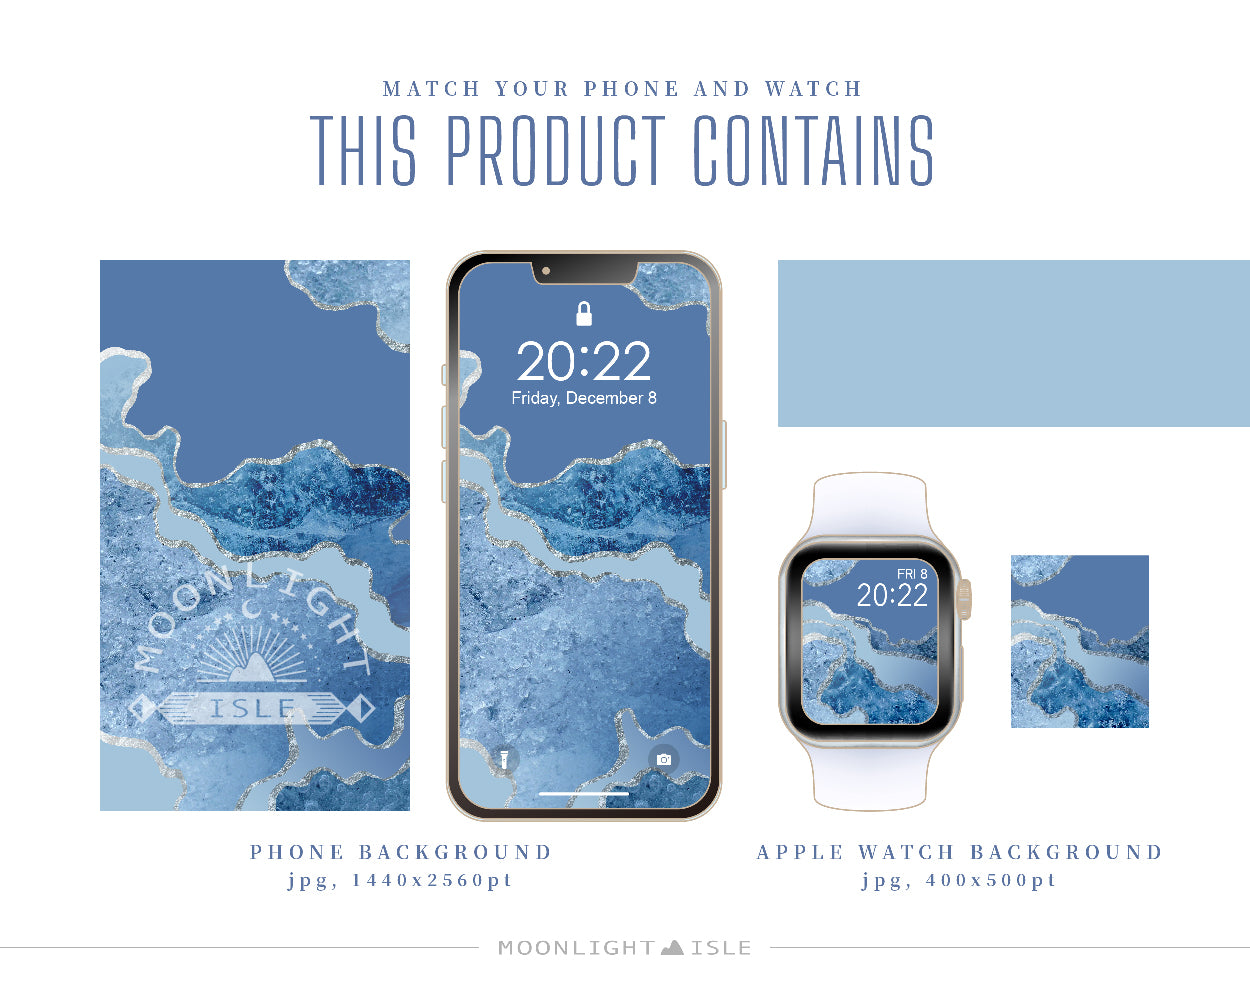 Swan Lake – Moody Blue | Phone & Apple Watch Wallpaper